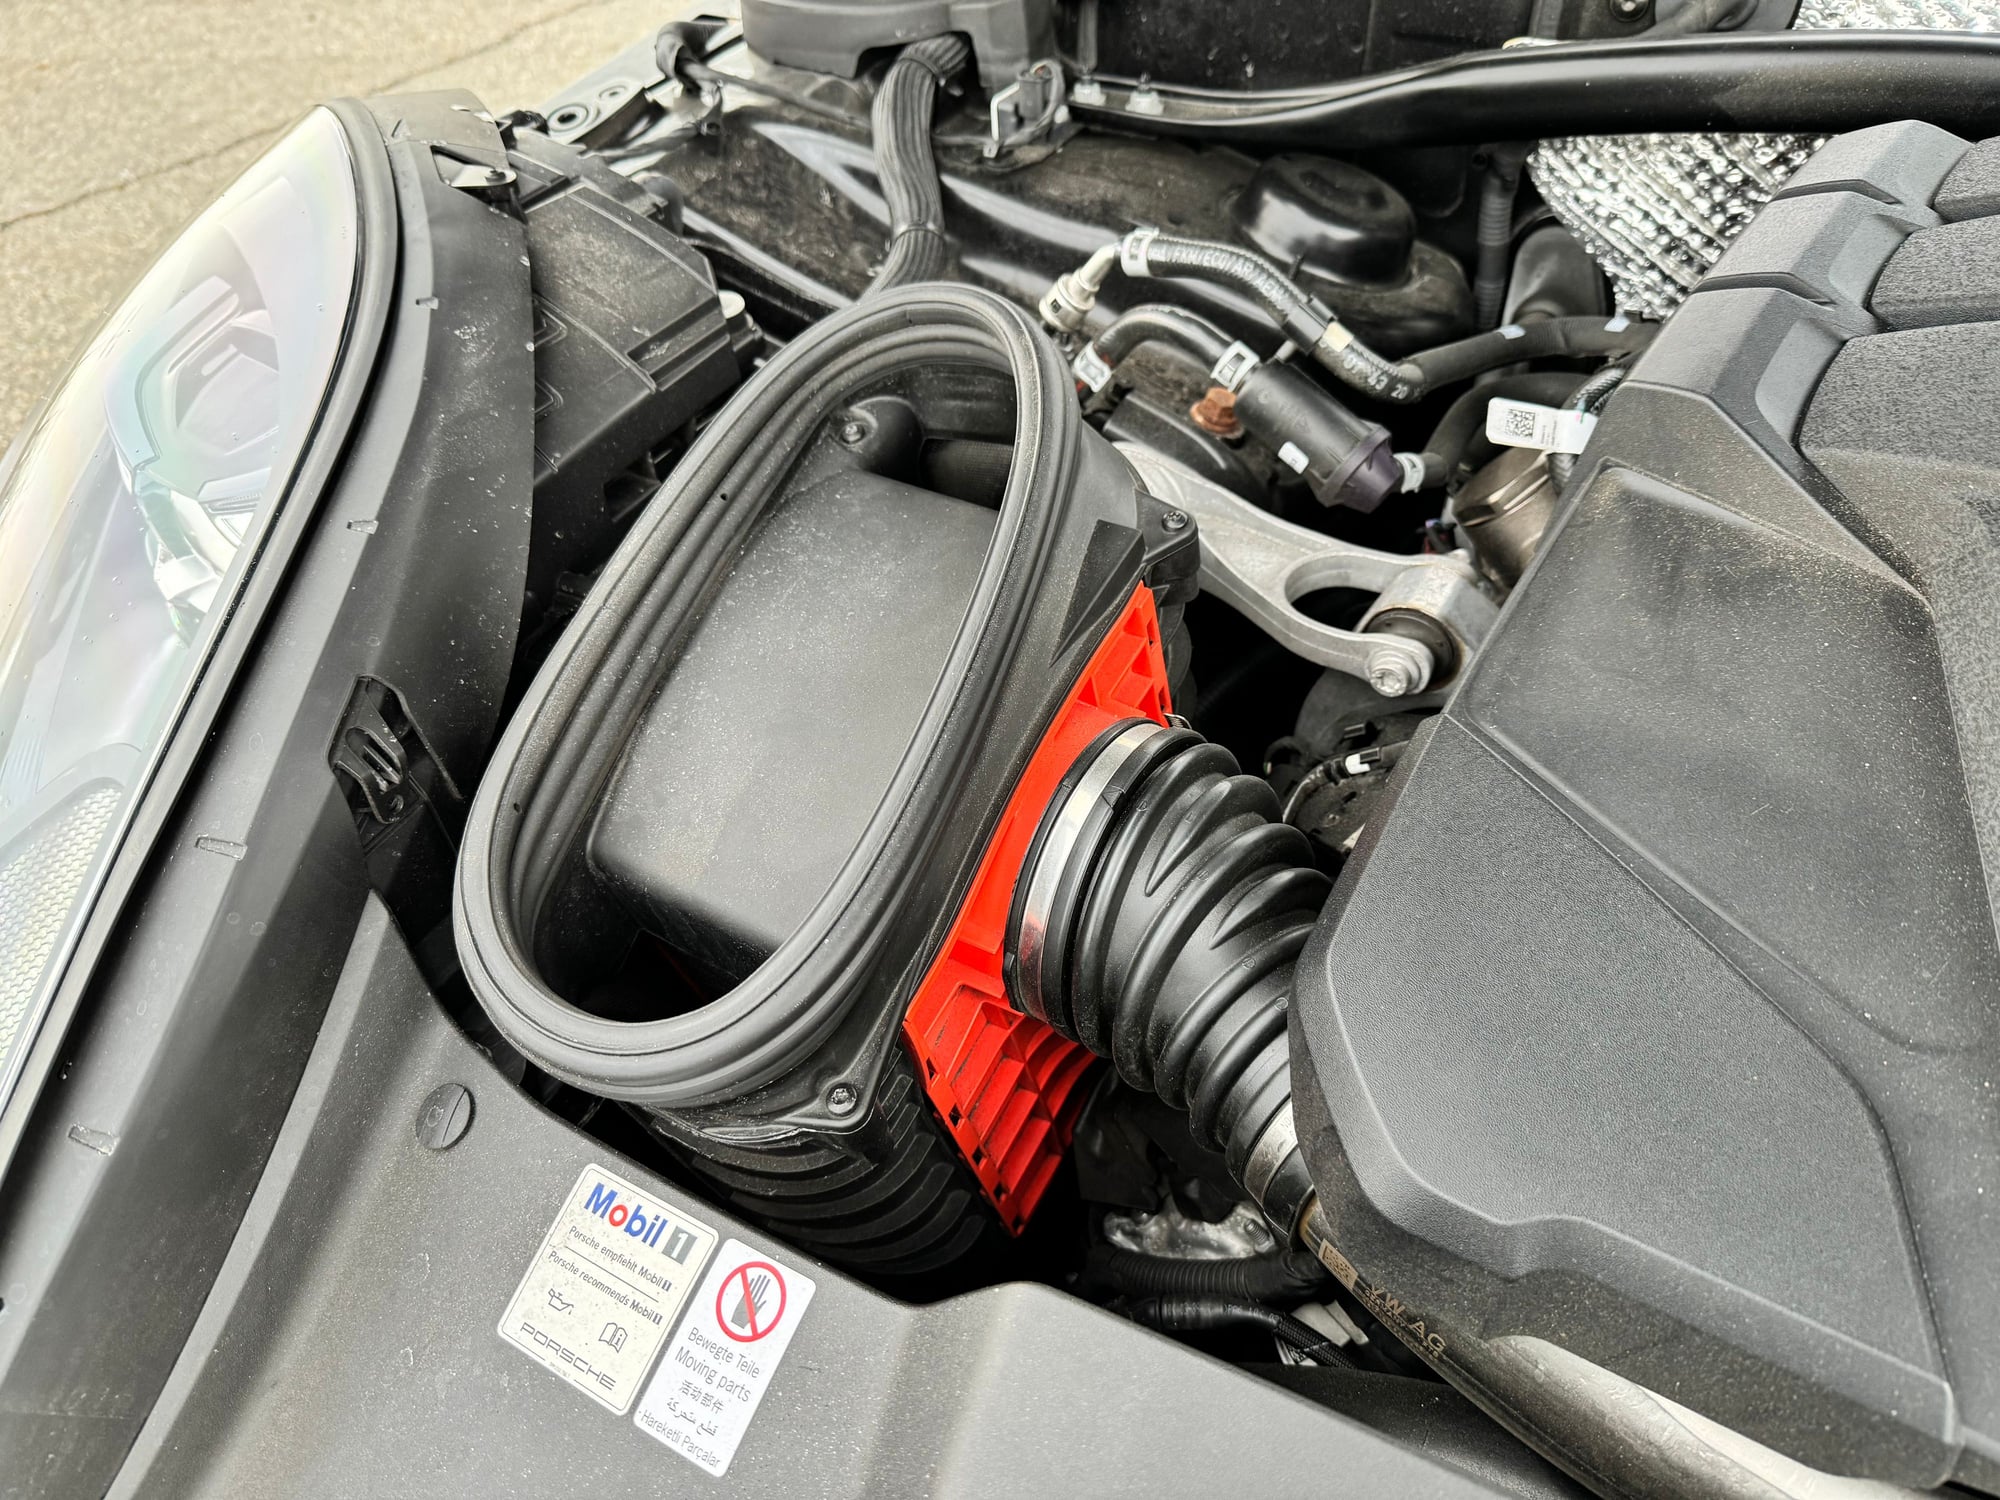 2021 Porsche Macan - 2021 CPO Macan Turbo *Prepaid Maintenance* - Used - Westport, CT 6880, United States